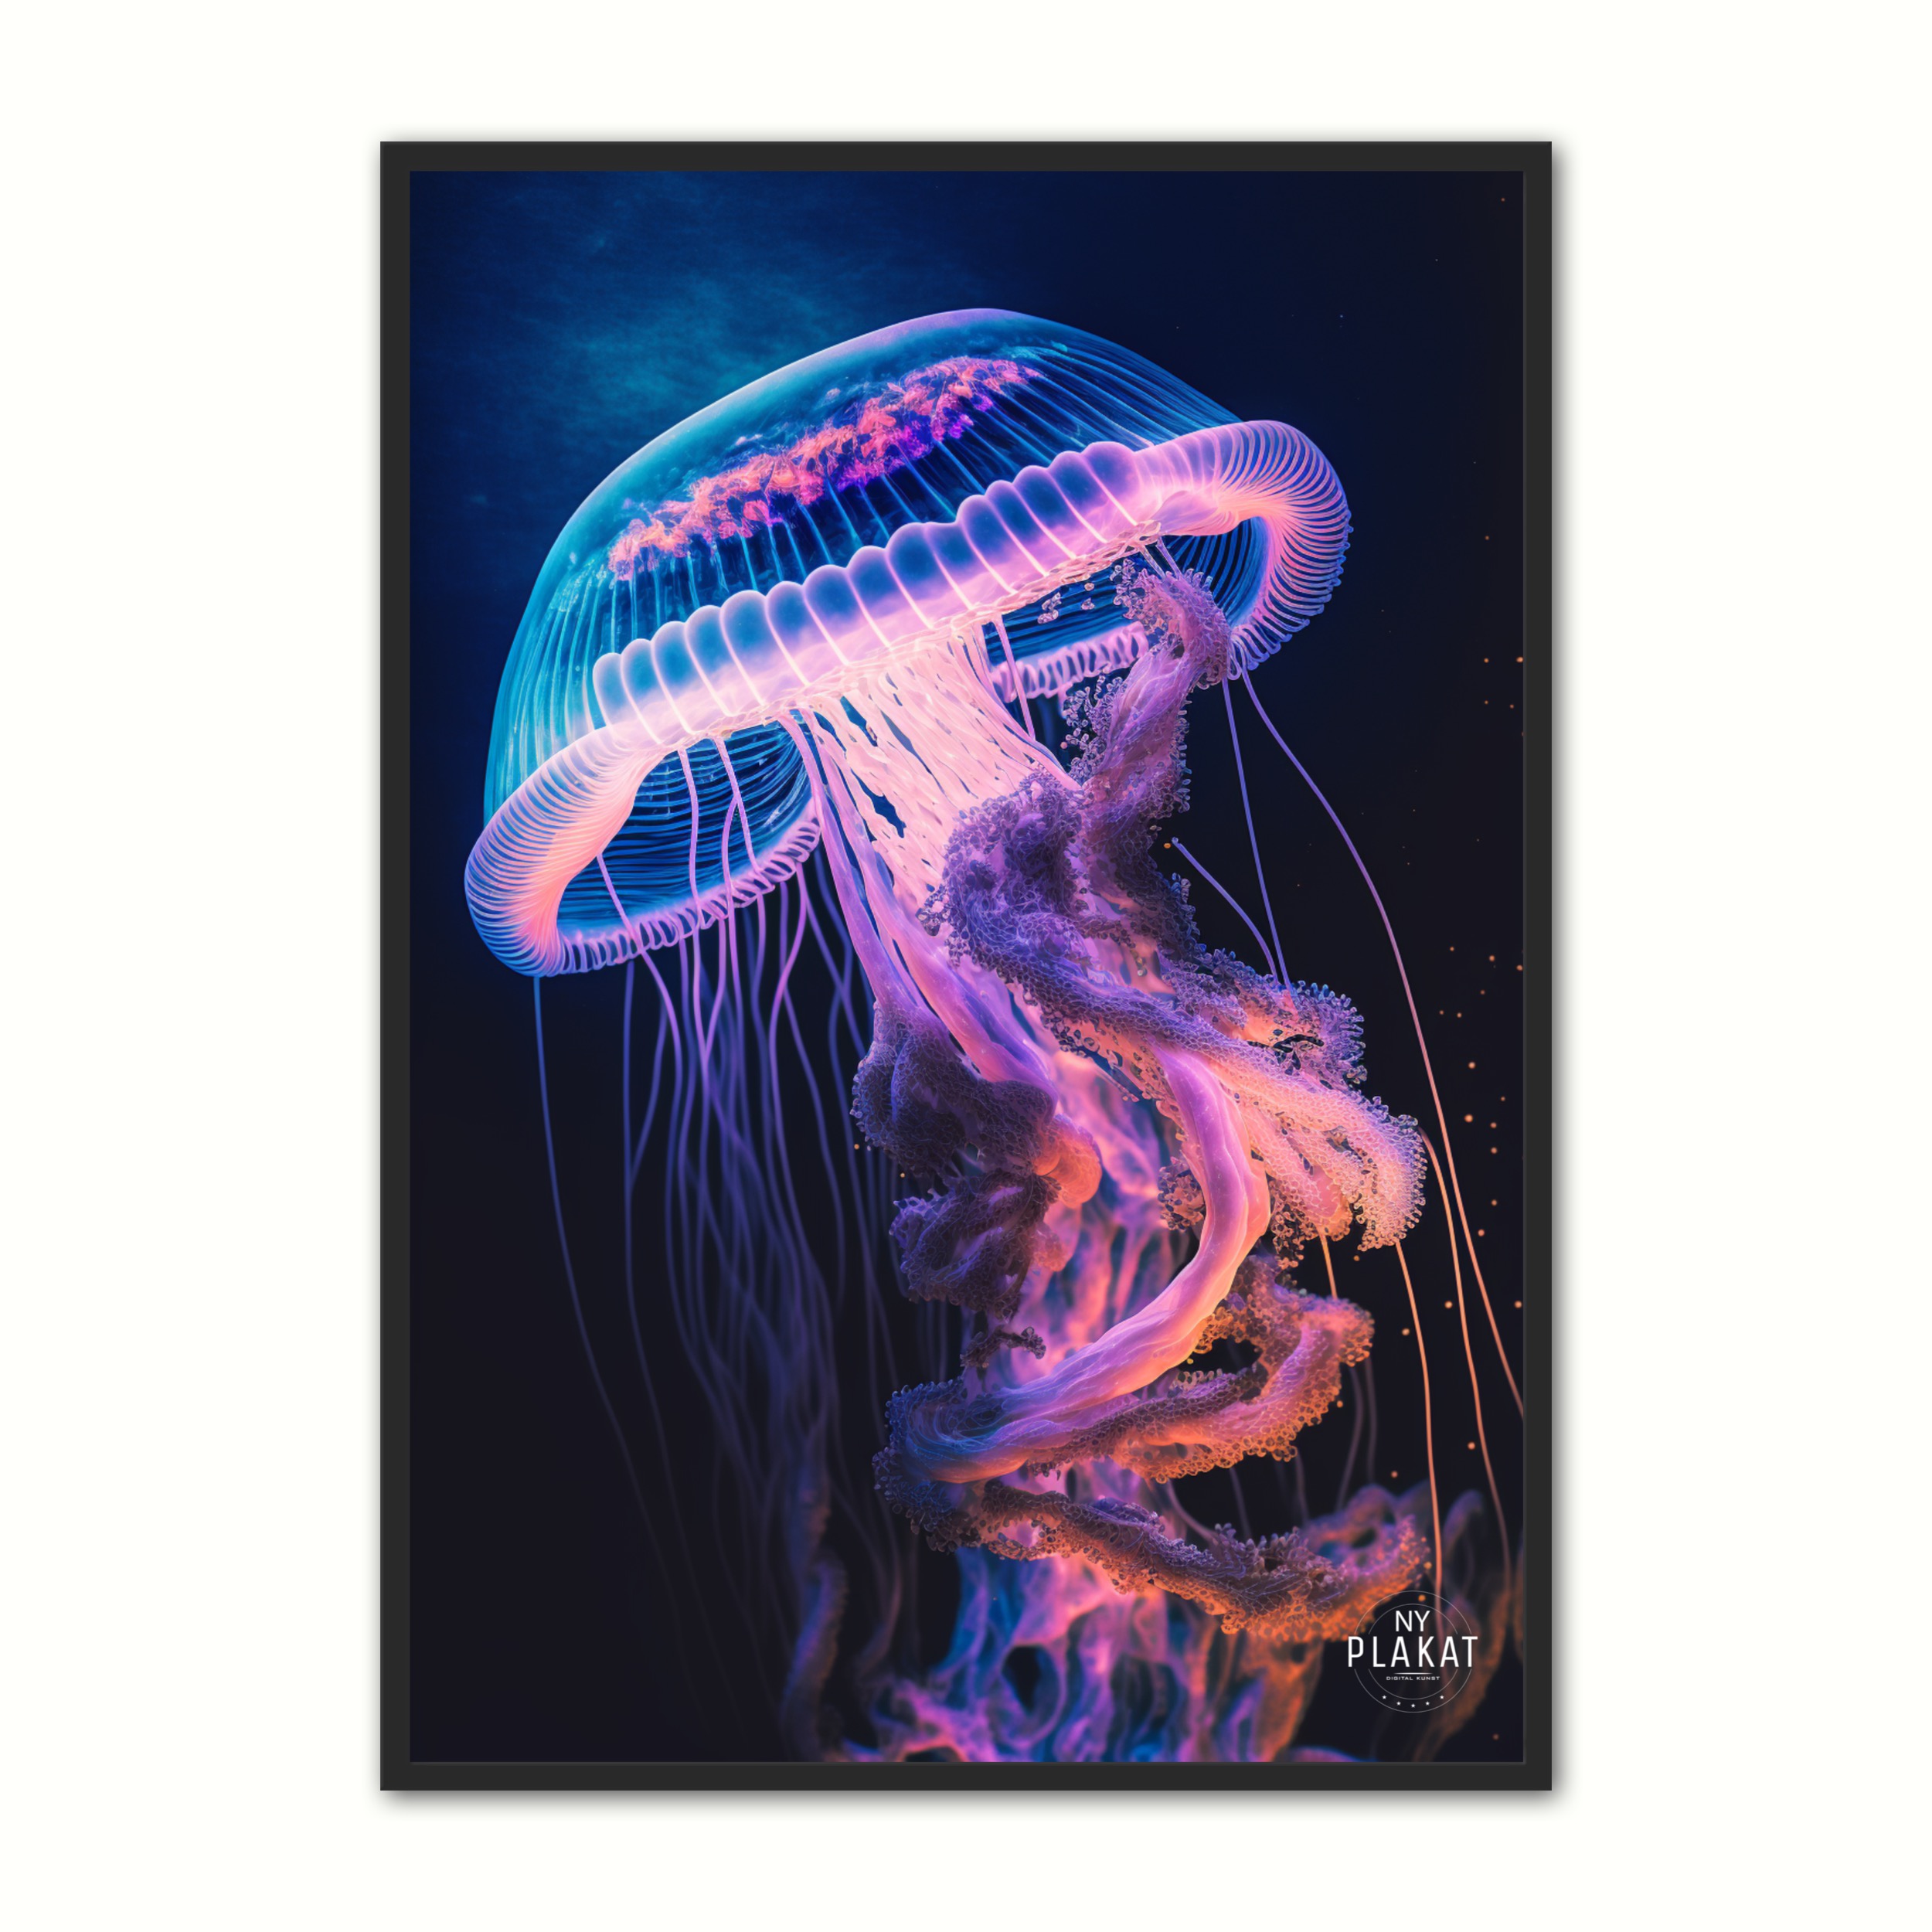 Se Jellyfish plakat No. 6 30 x 40 cm hos Nyplakat.dk